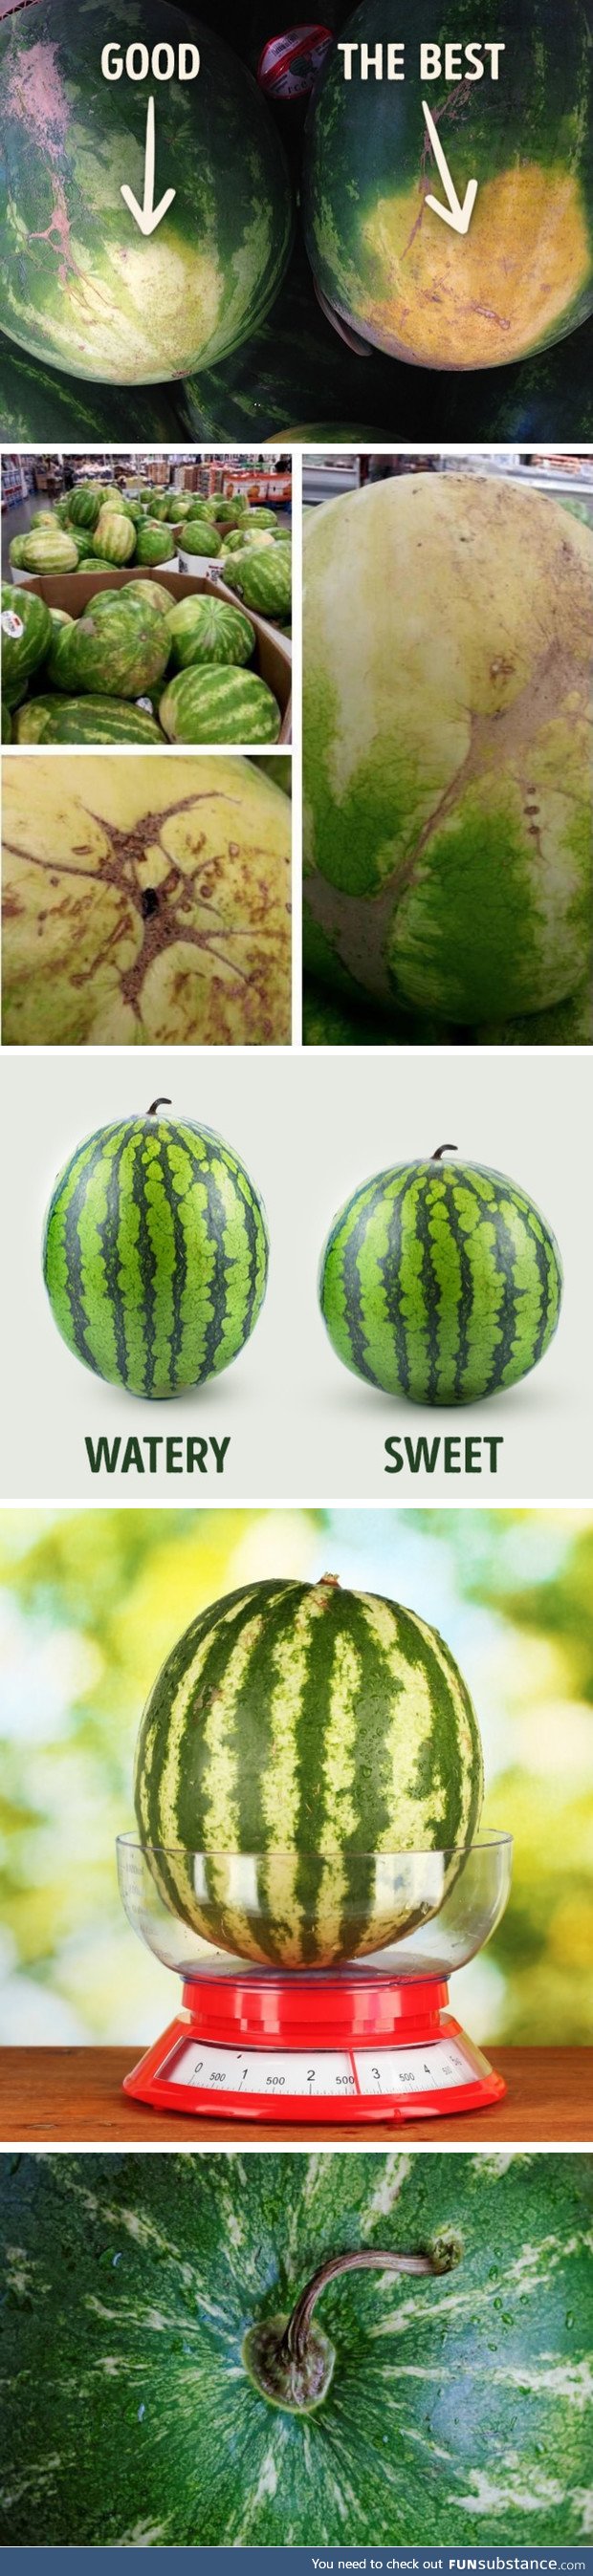 Watermelon tips